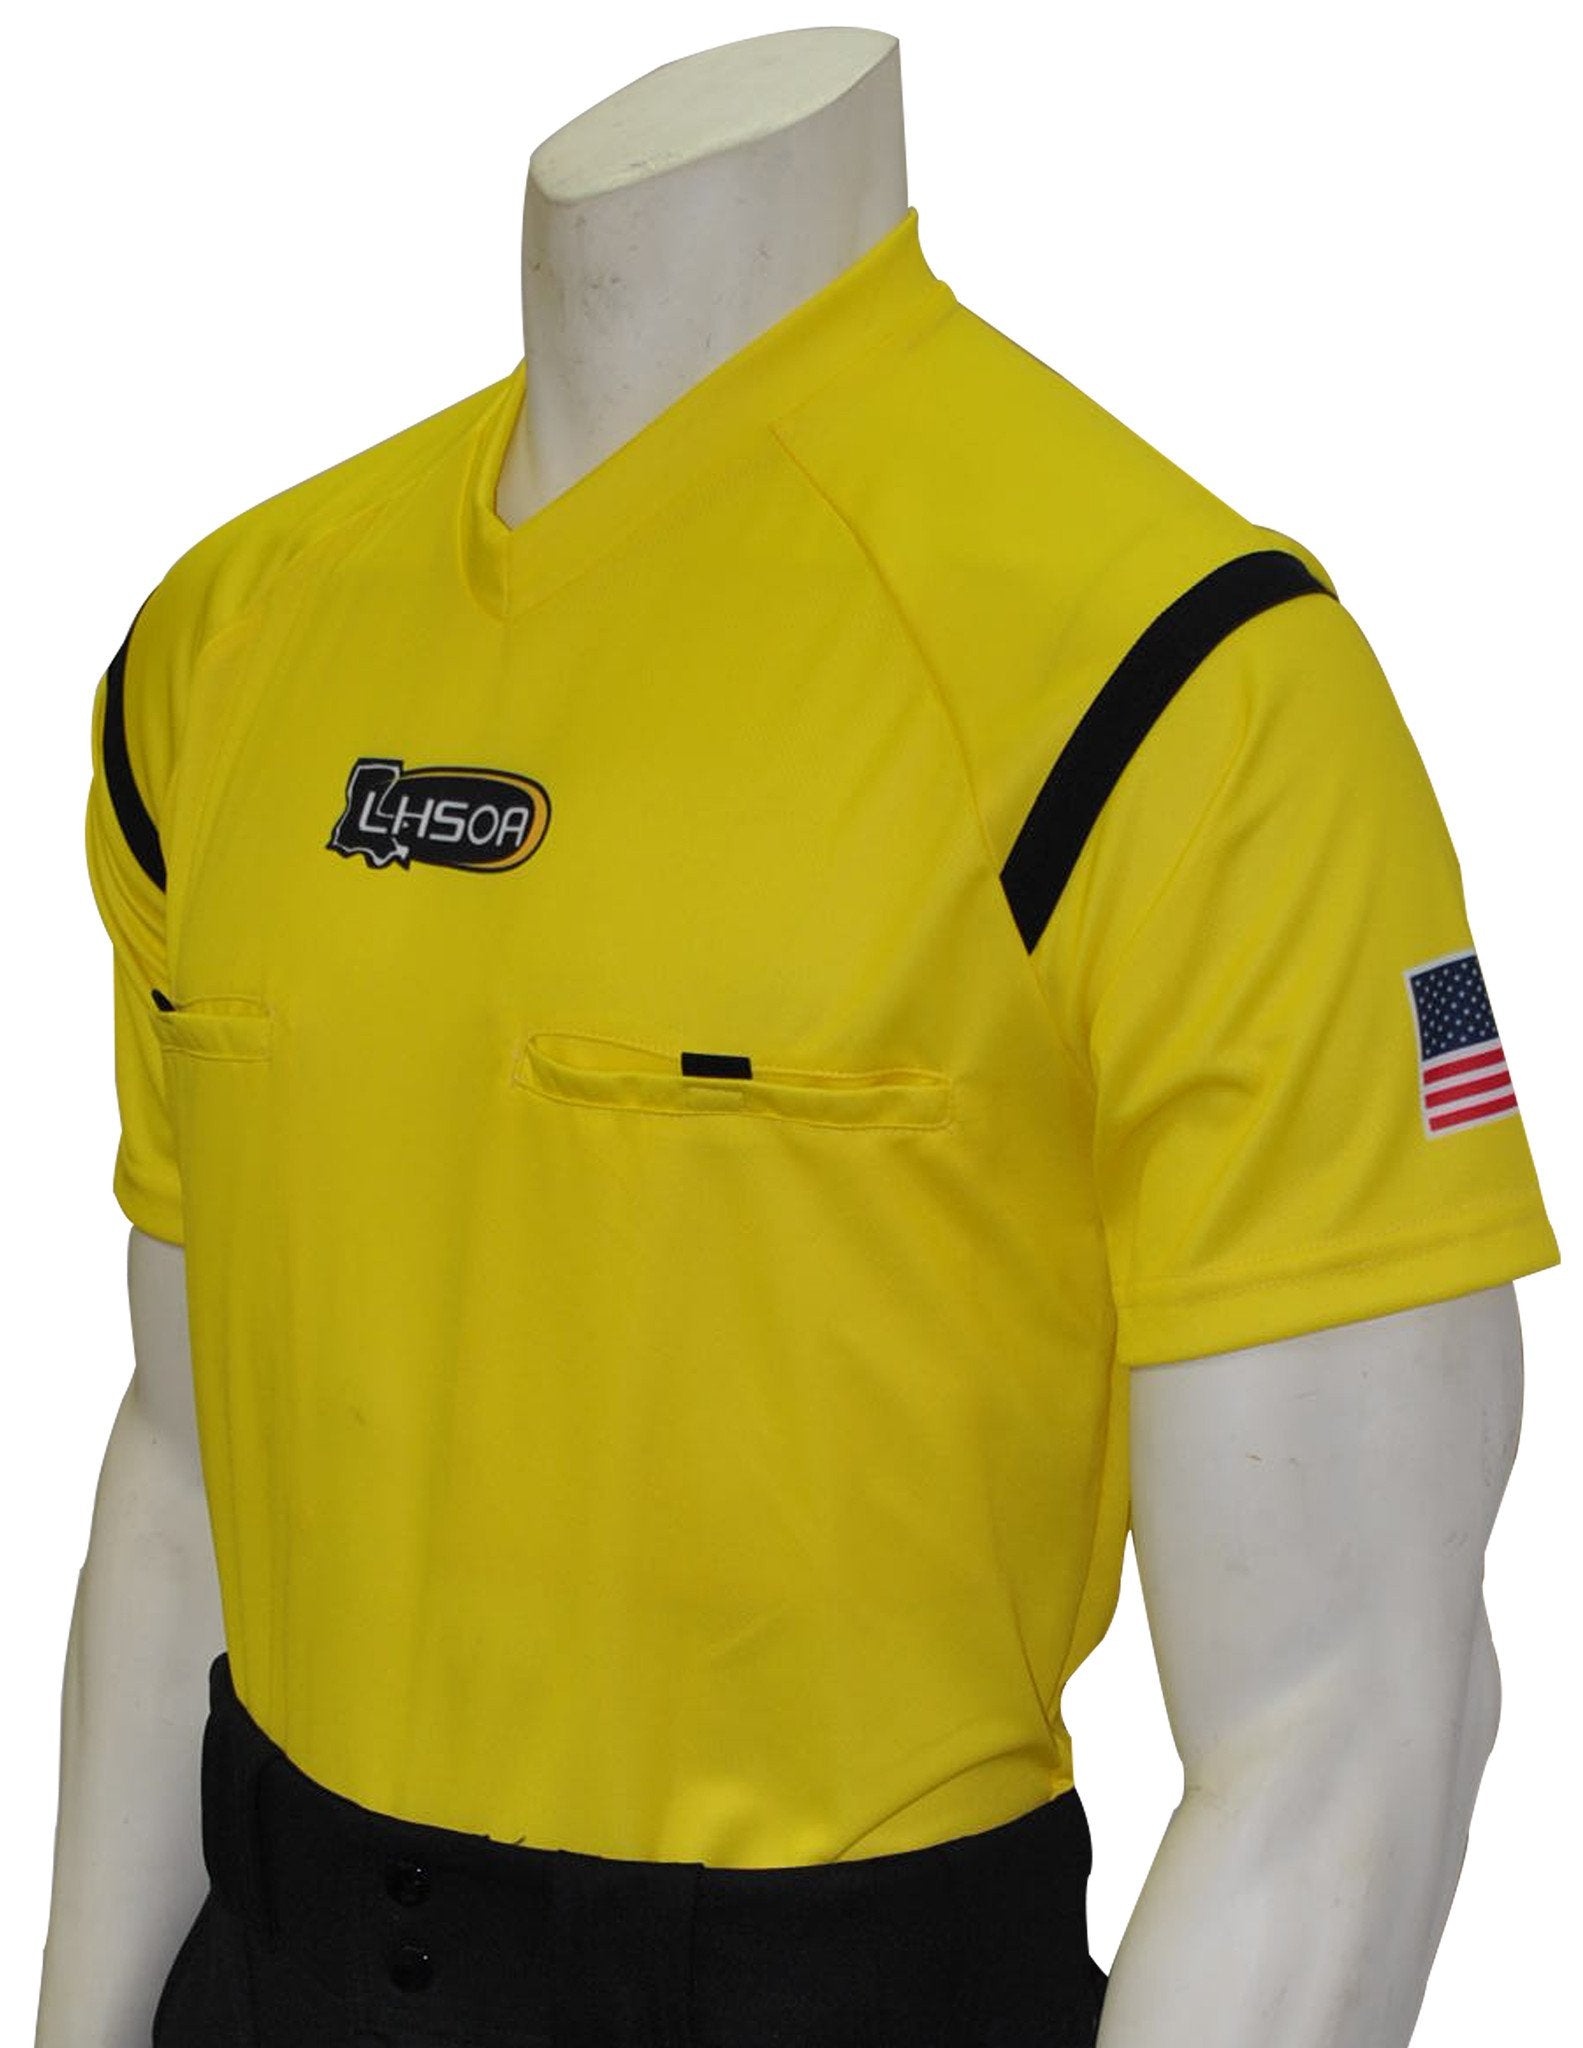 USA900LA YW - Smitty "Made in USA" - Dye Sub Louisiana Yellow Soccer Short Sleeve Shirt